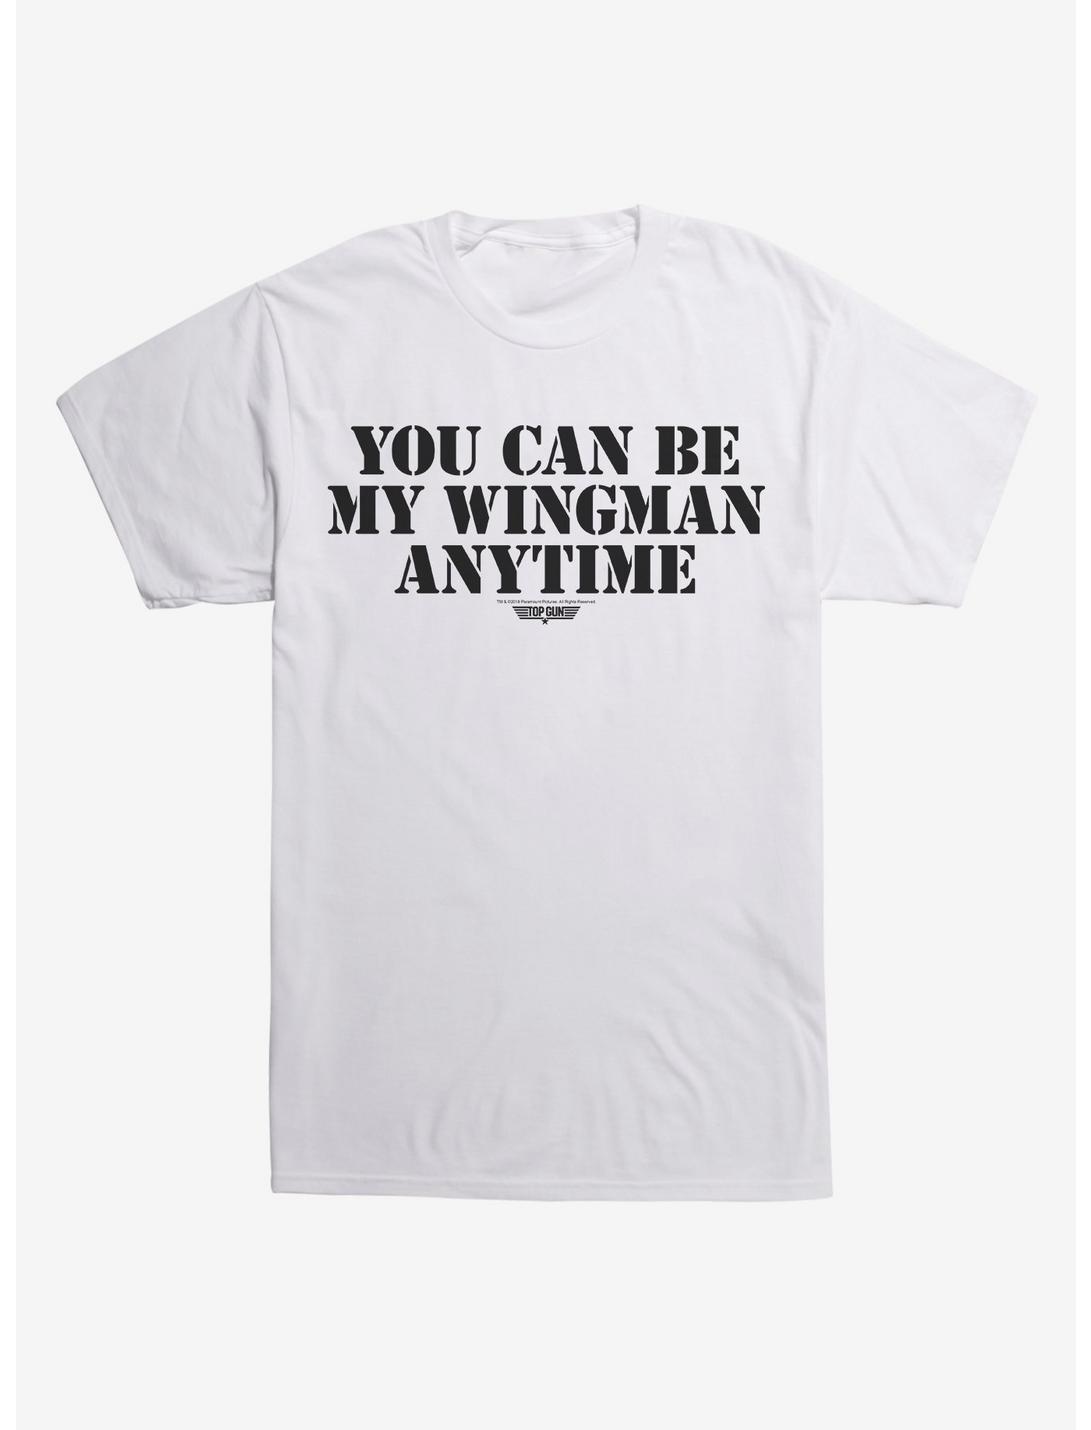 Top Gun Wingman T-Shirt, WHITE, hi-res